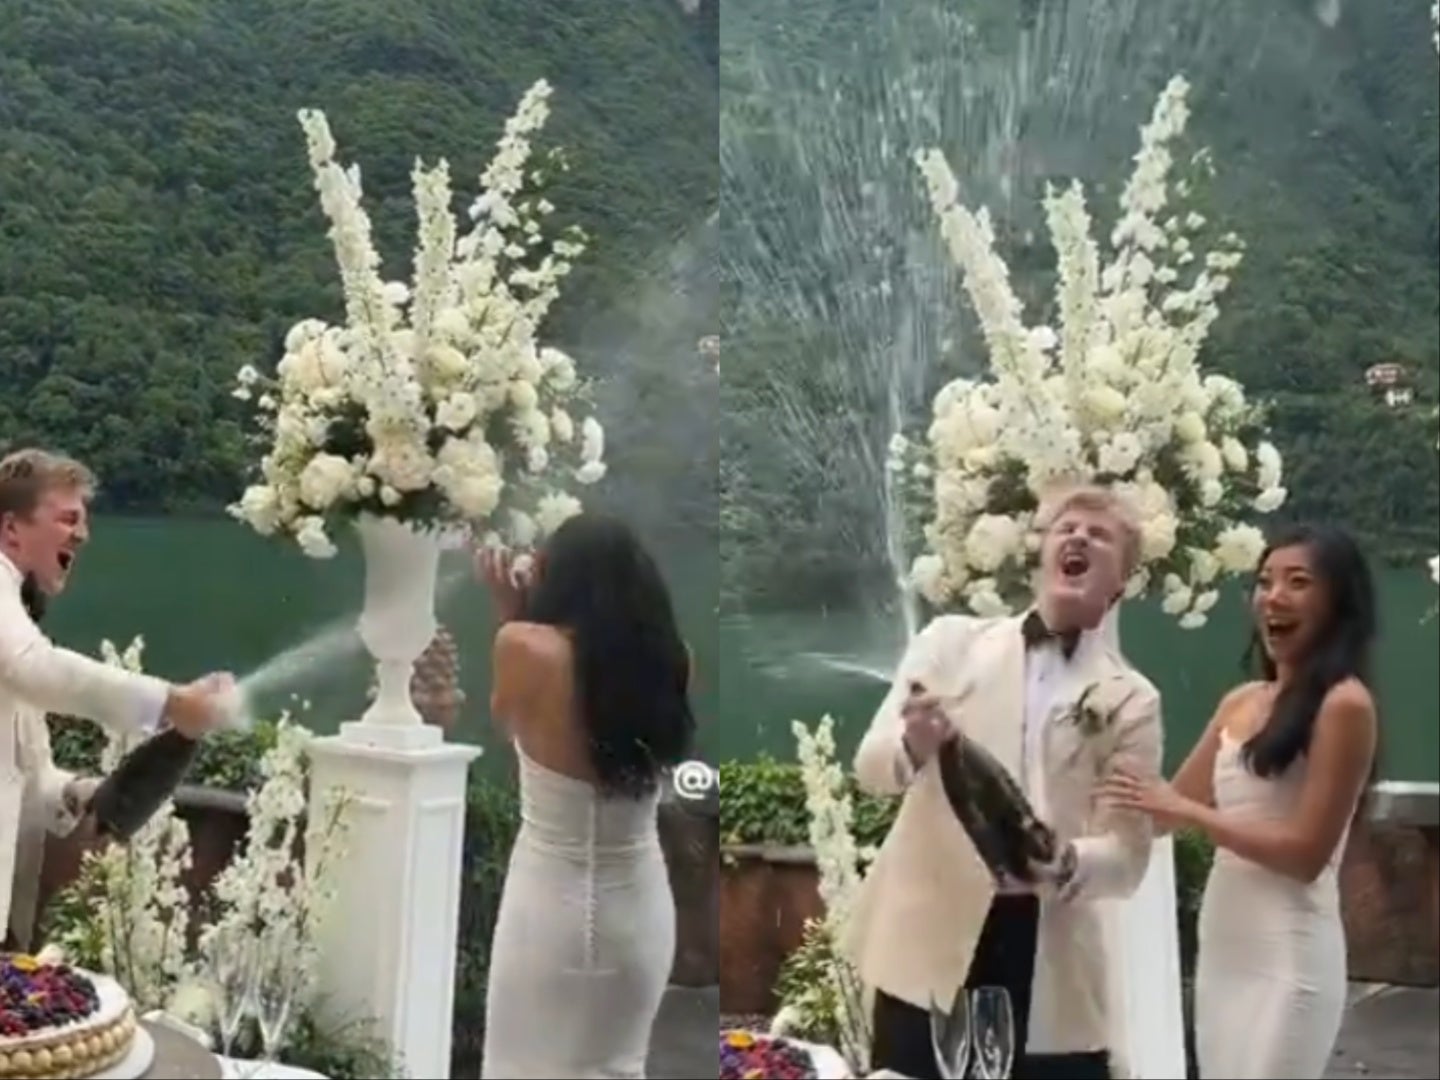 Groom sparks viral debate after he sprayed bride with champagne during wedding